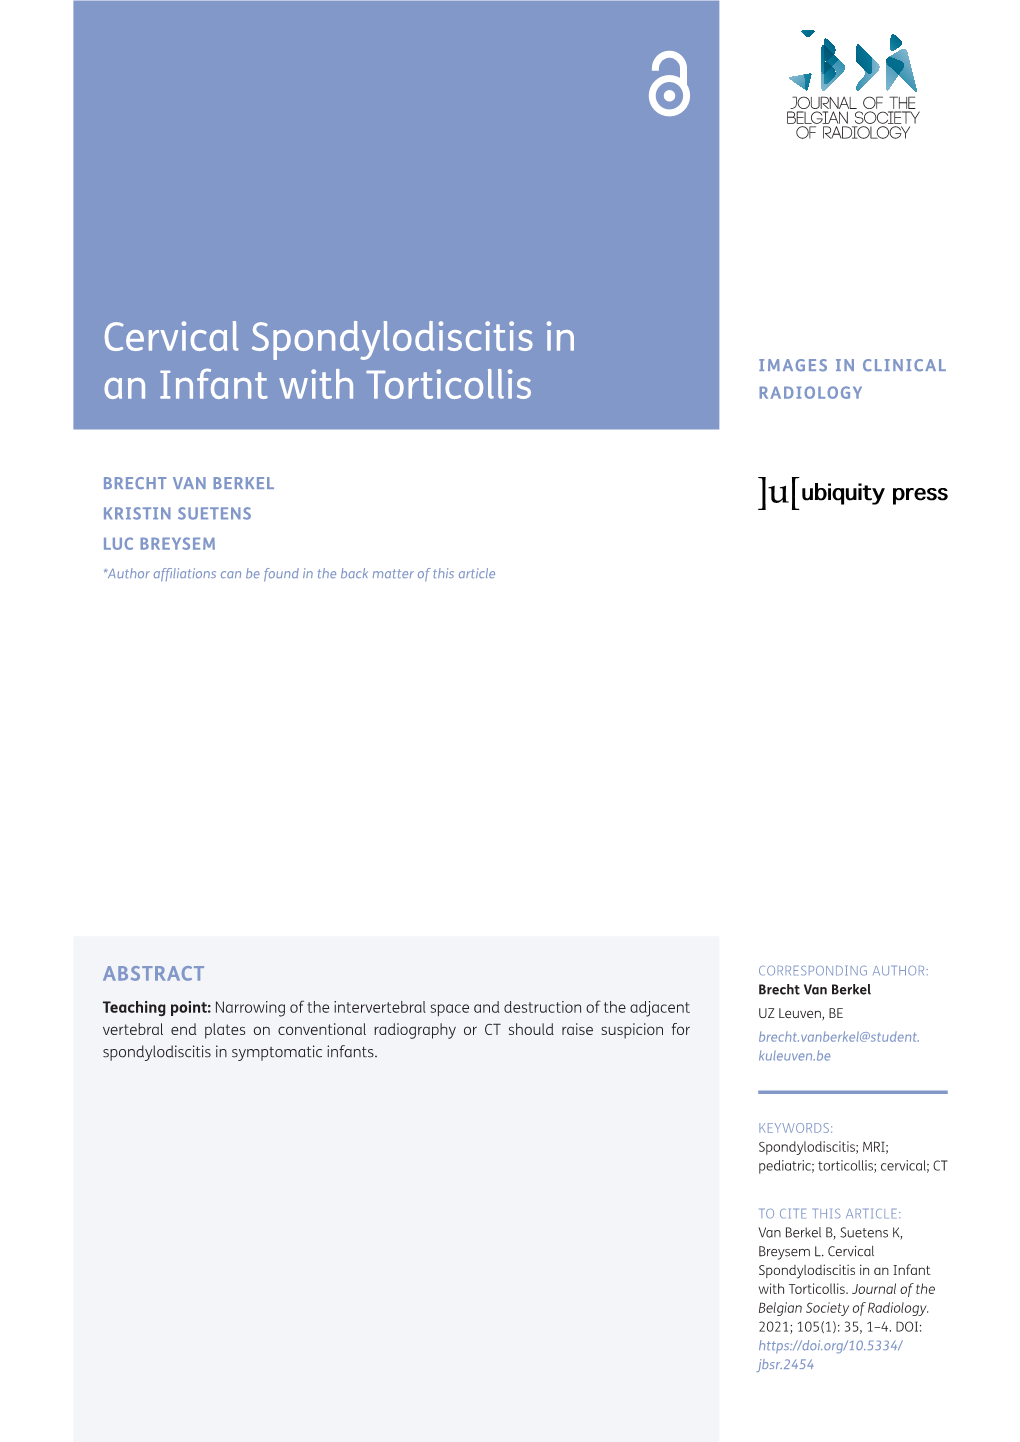 Cervical Spondylodiscitis in an Infant with Torticollis